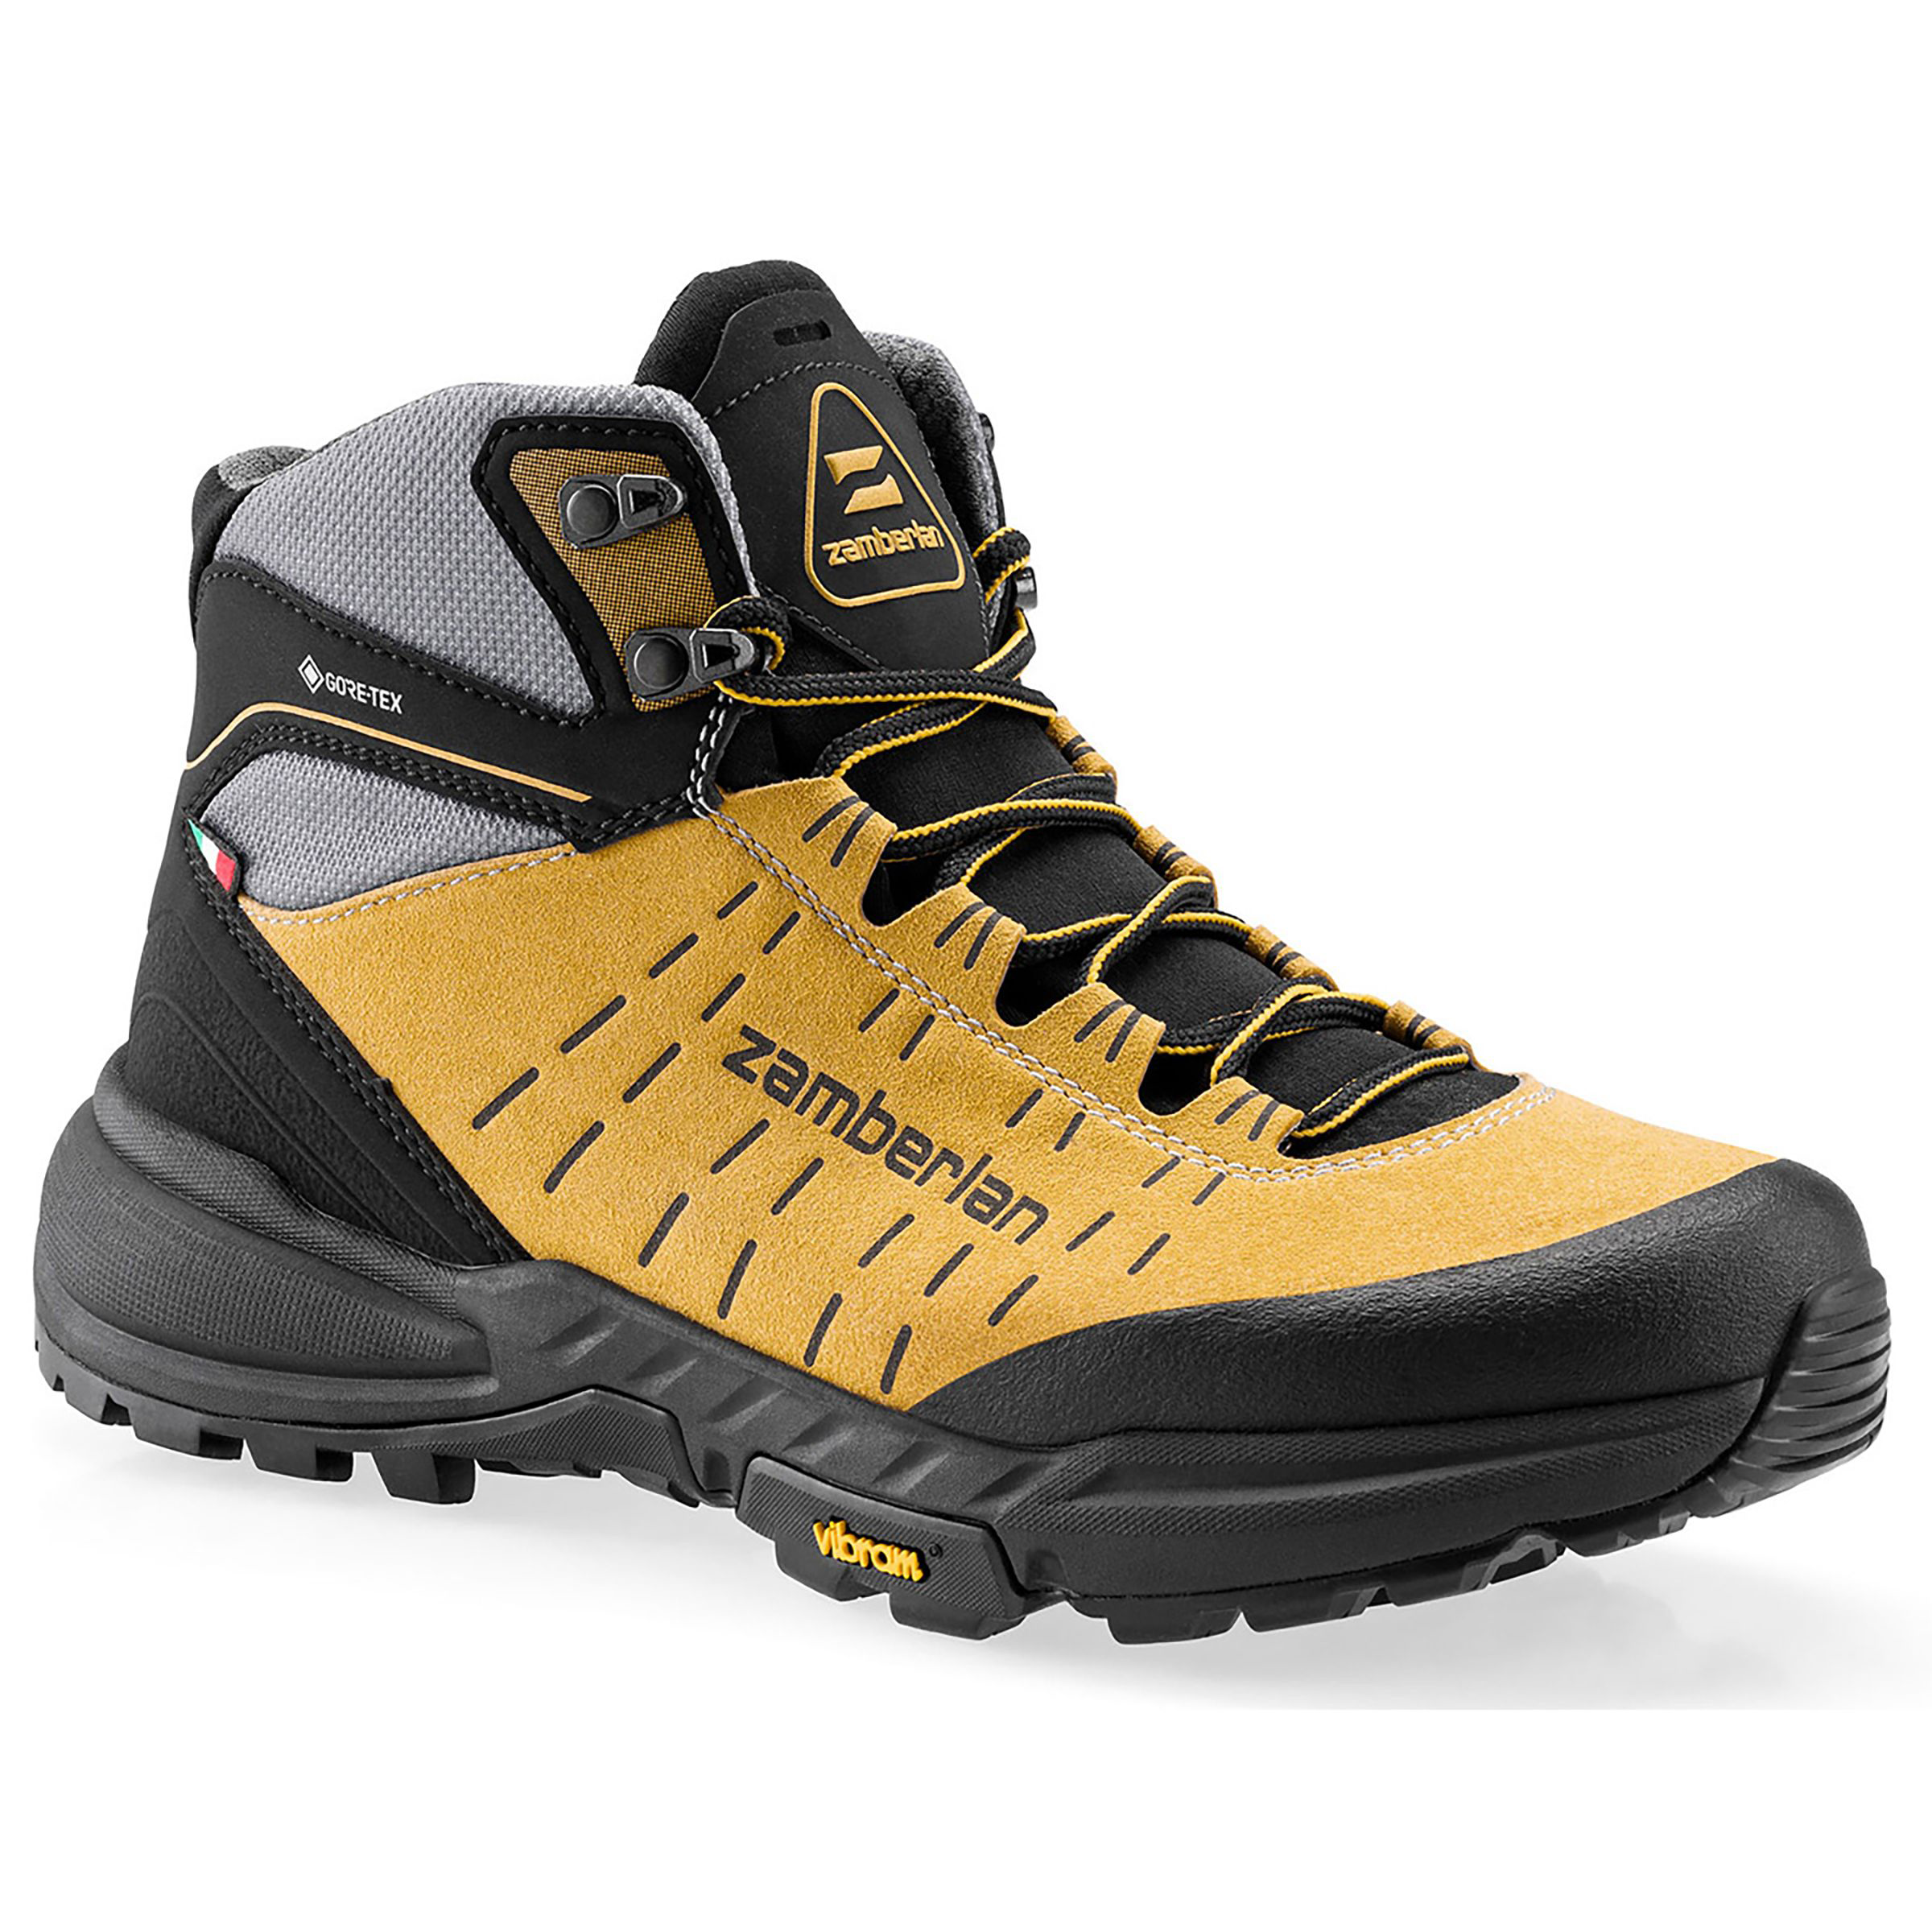 Zamberlan 334 Circe GTX Waterproof Hiking Boots for Ladies - Yellow - 9M